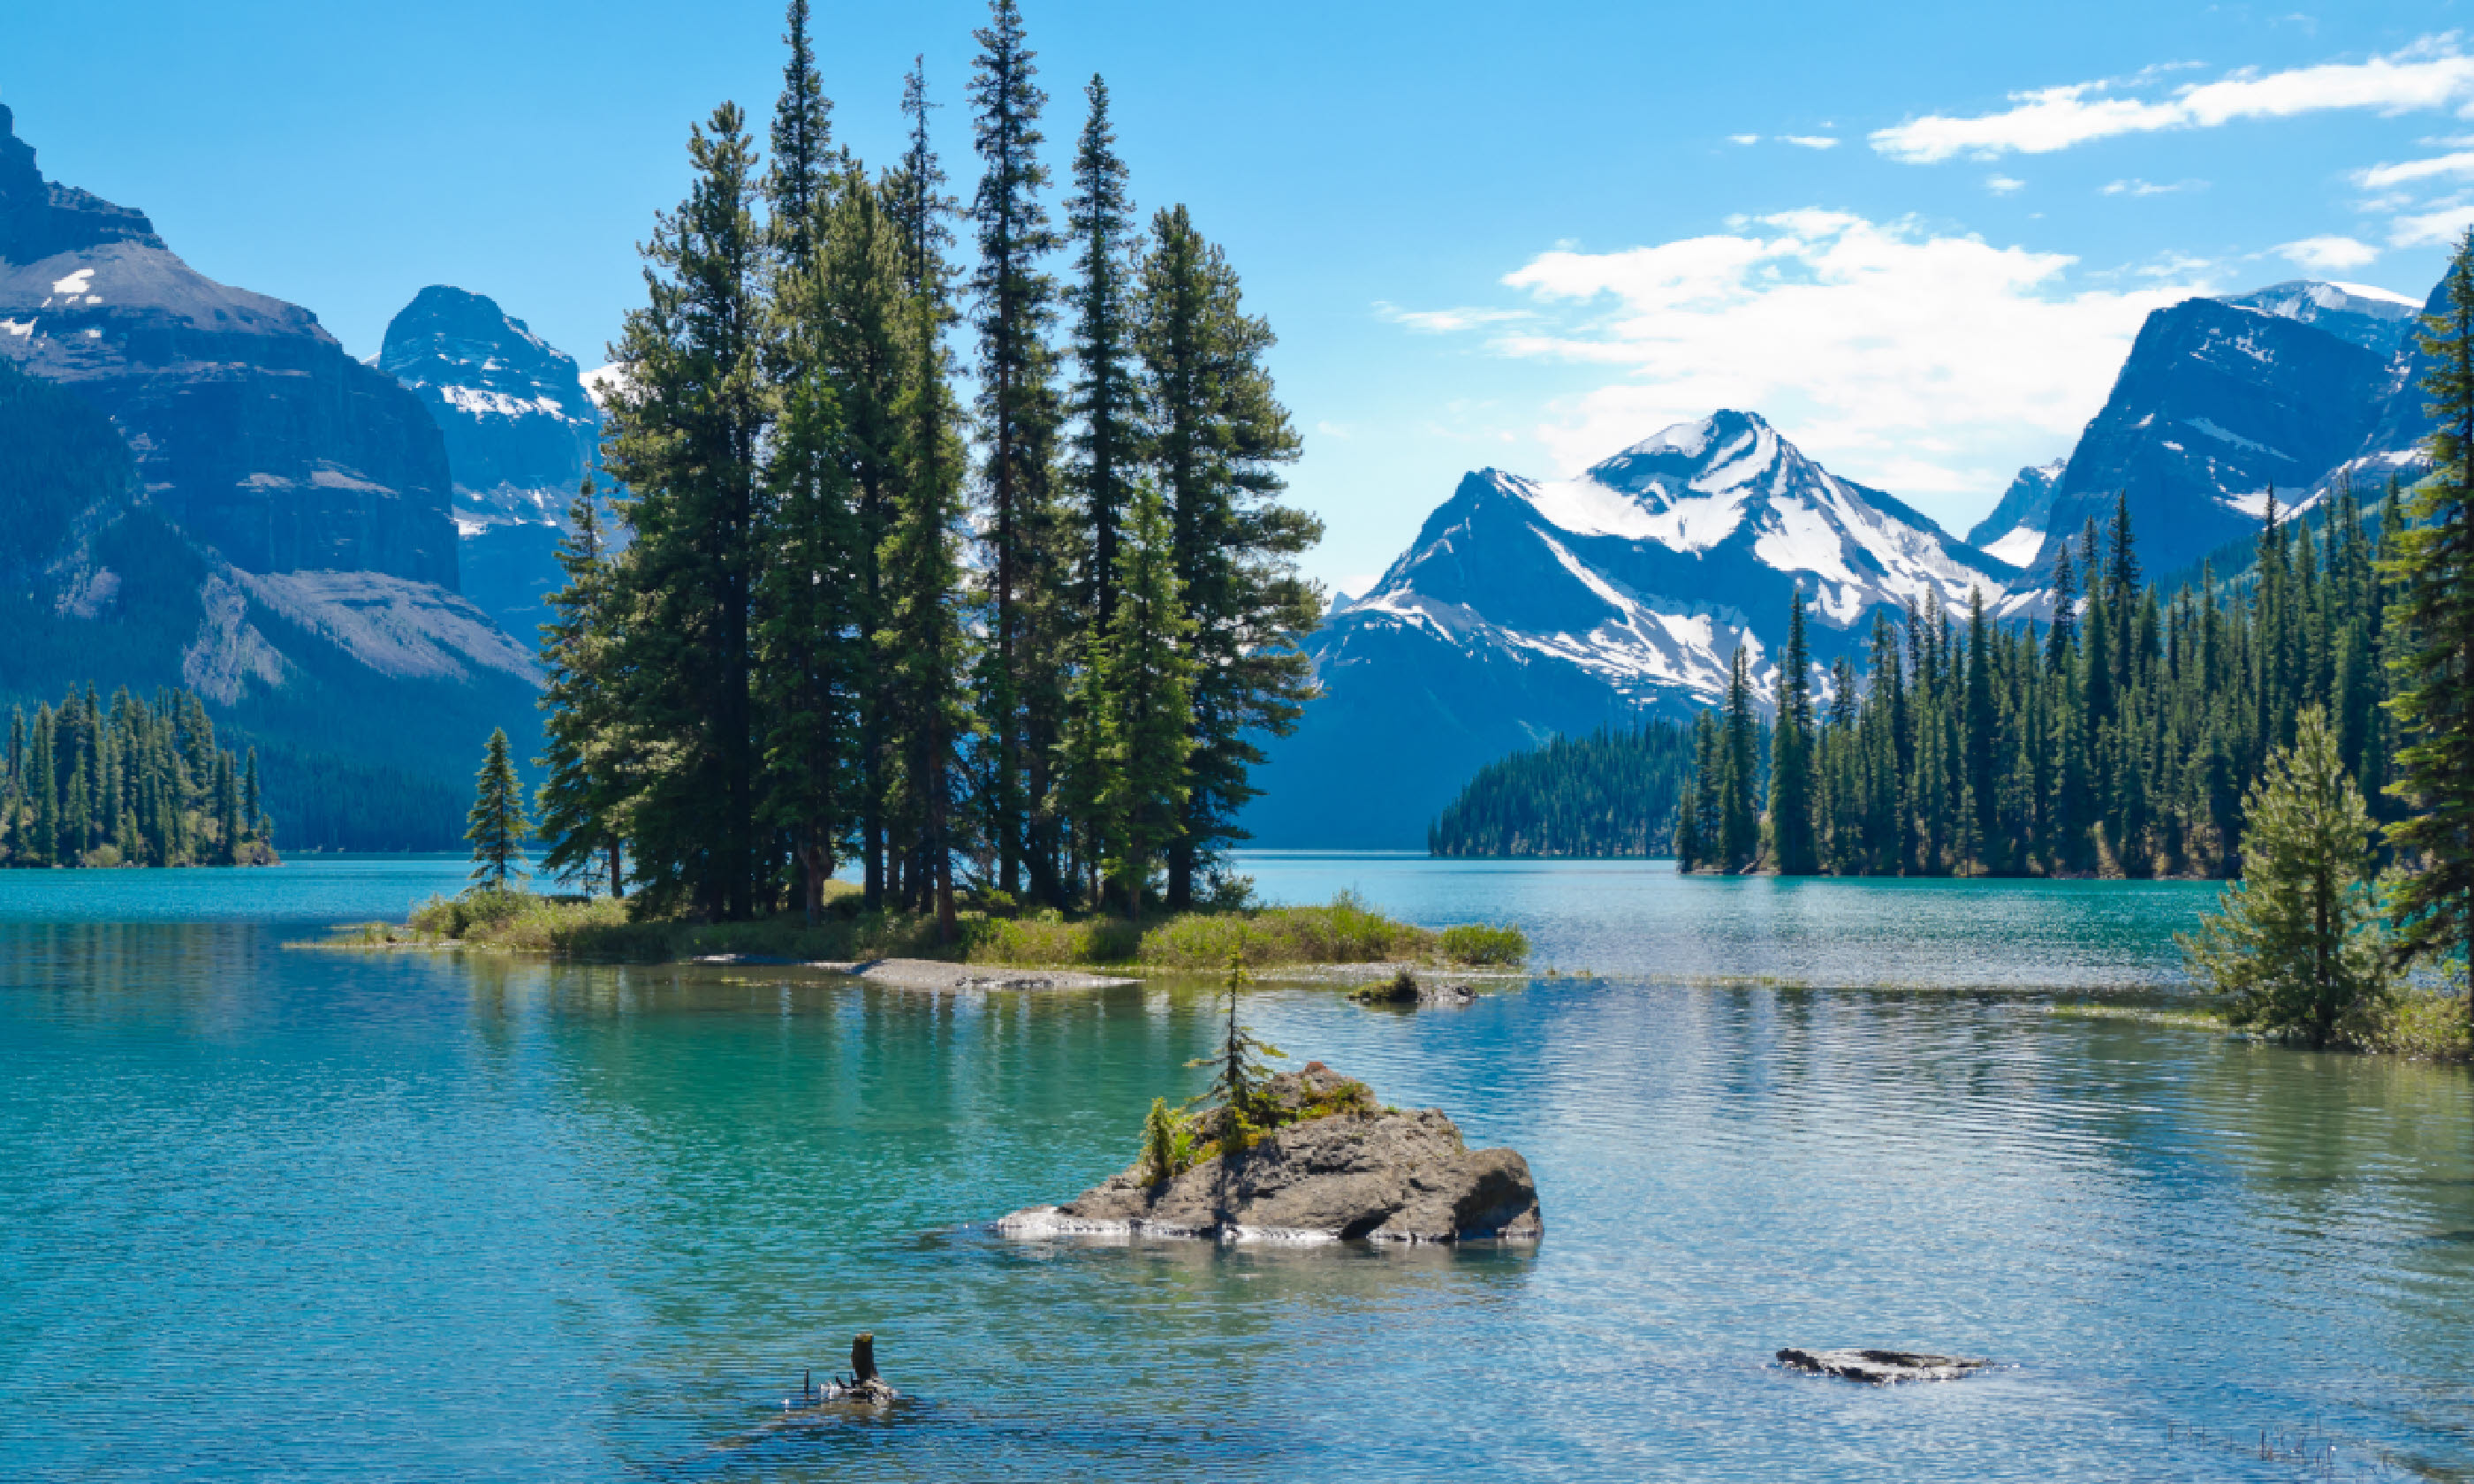 Lake Maligne, Canada (Shutterstock: see credit below)